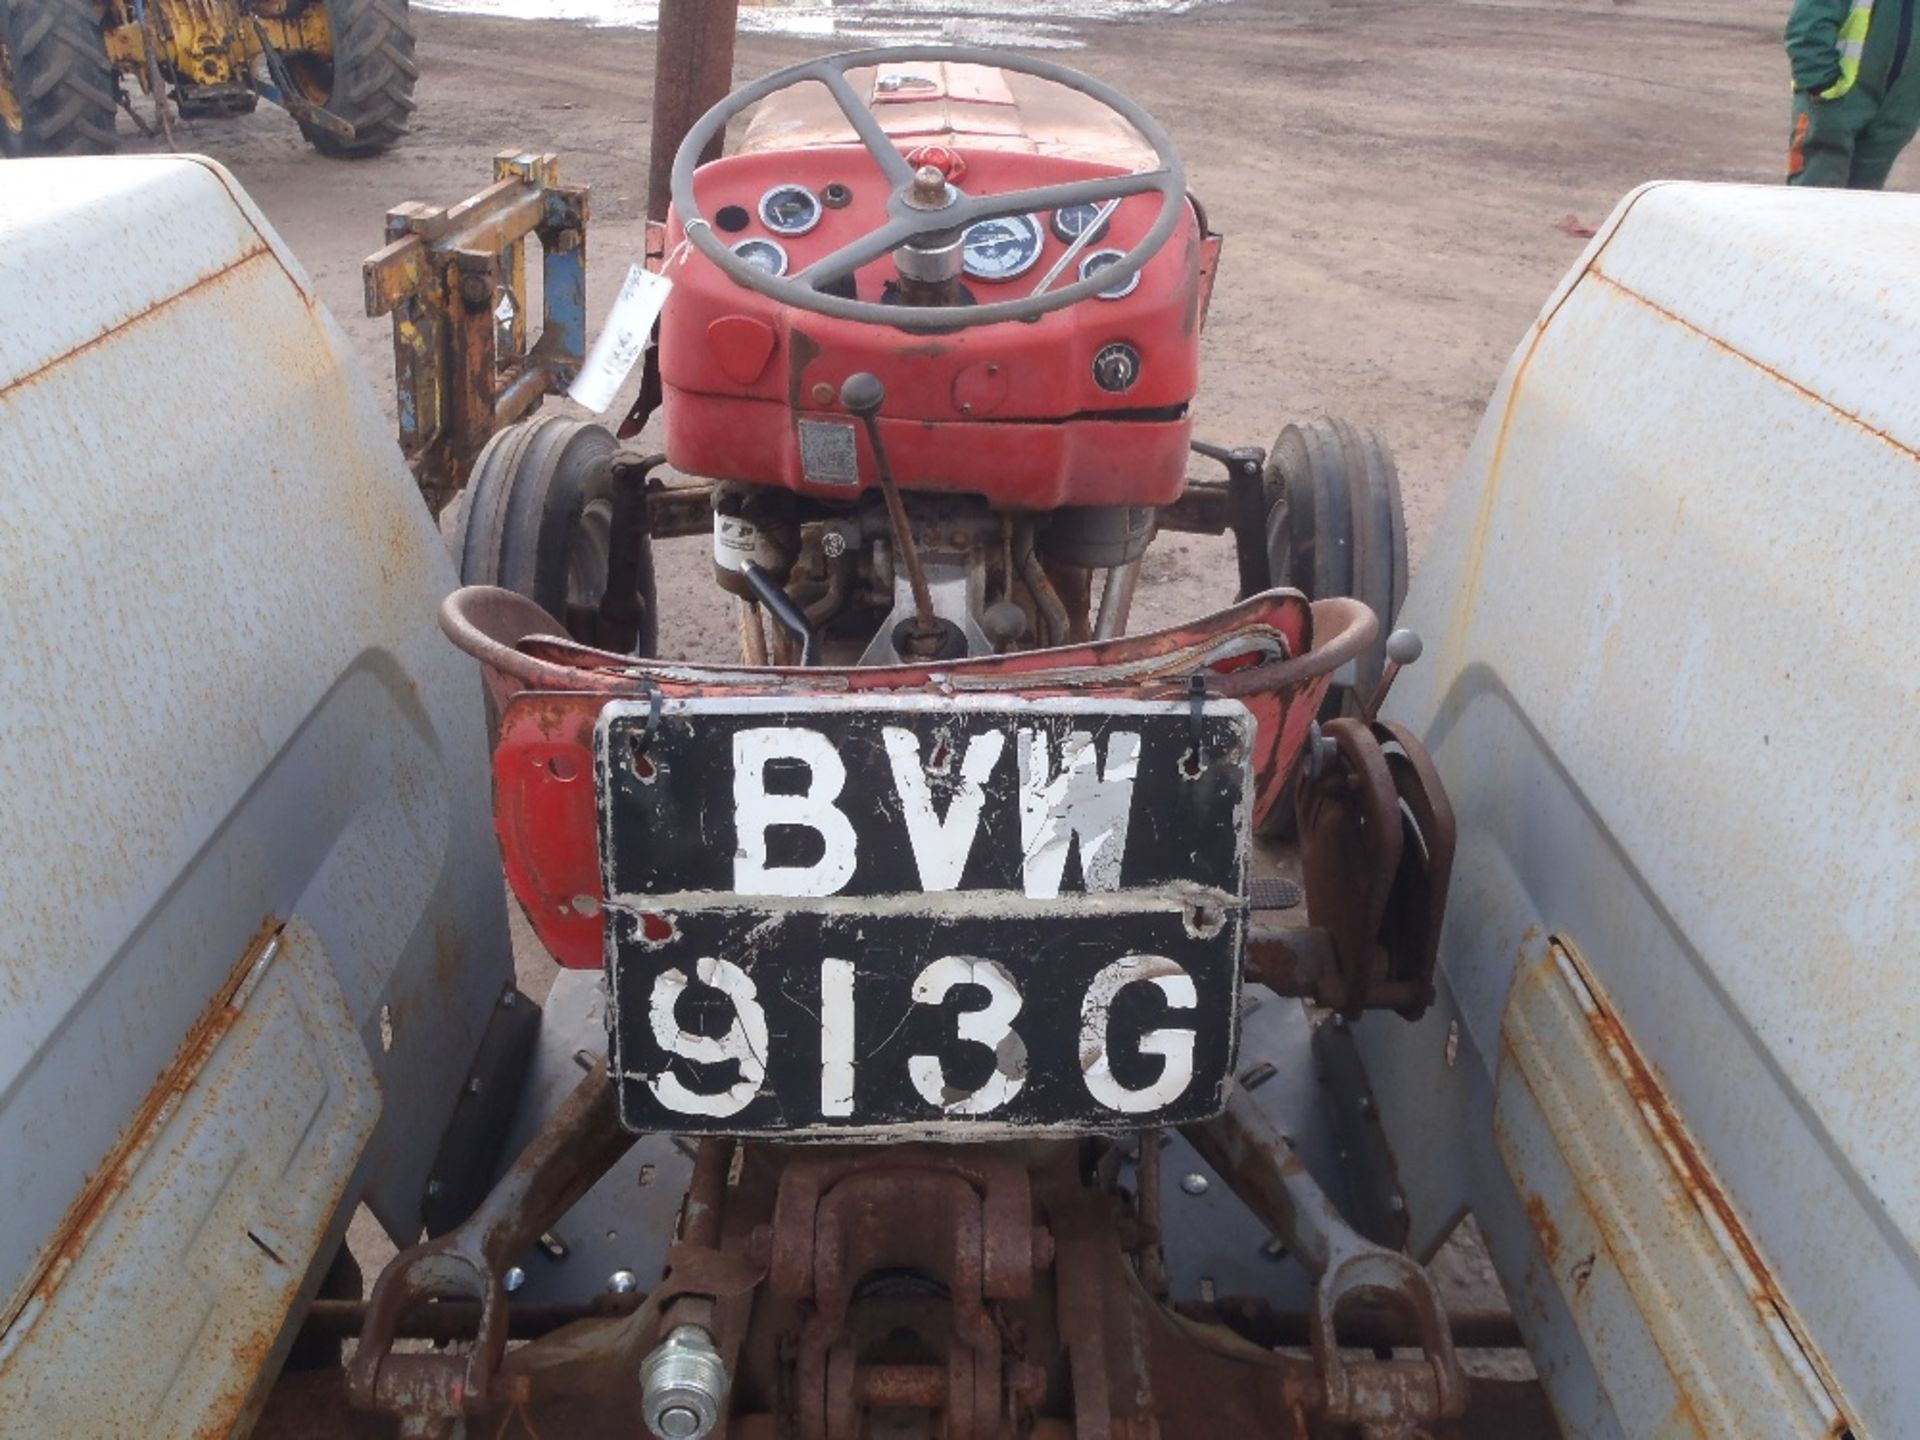 Massey Ferguson 135 2wd Tractor. V5 will be supplied. Reg.No. BVW 913G Ser No 113789 - Image 5 of 9